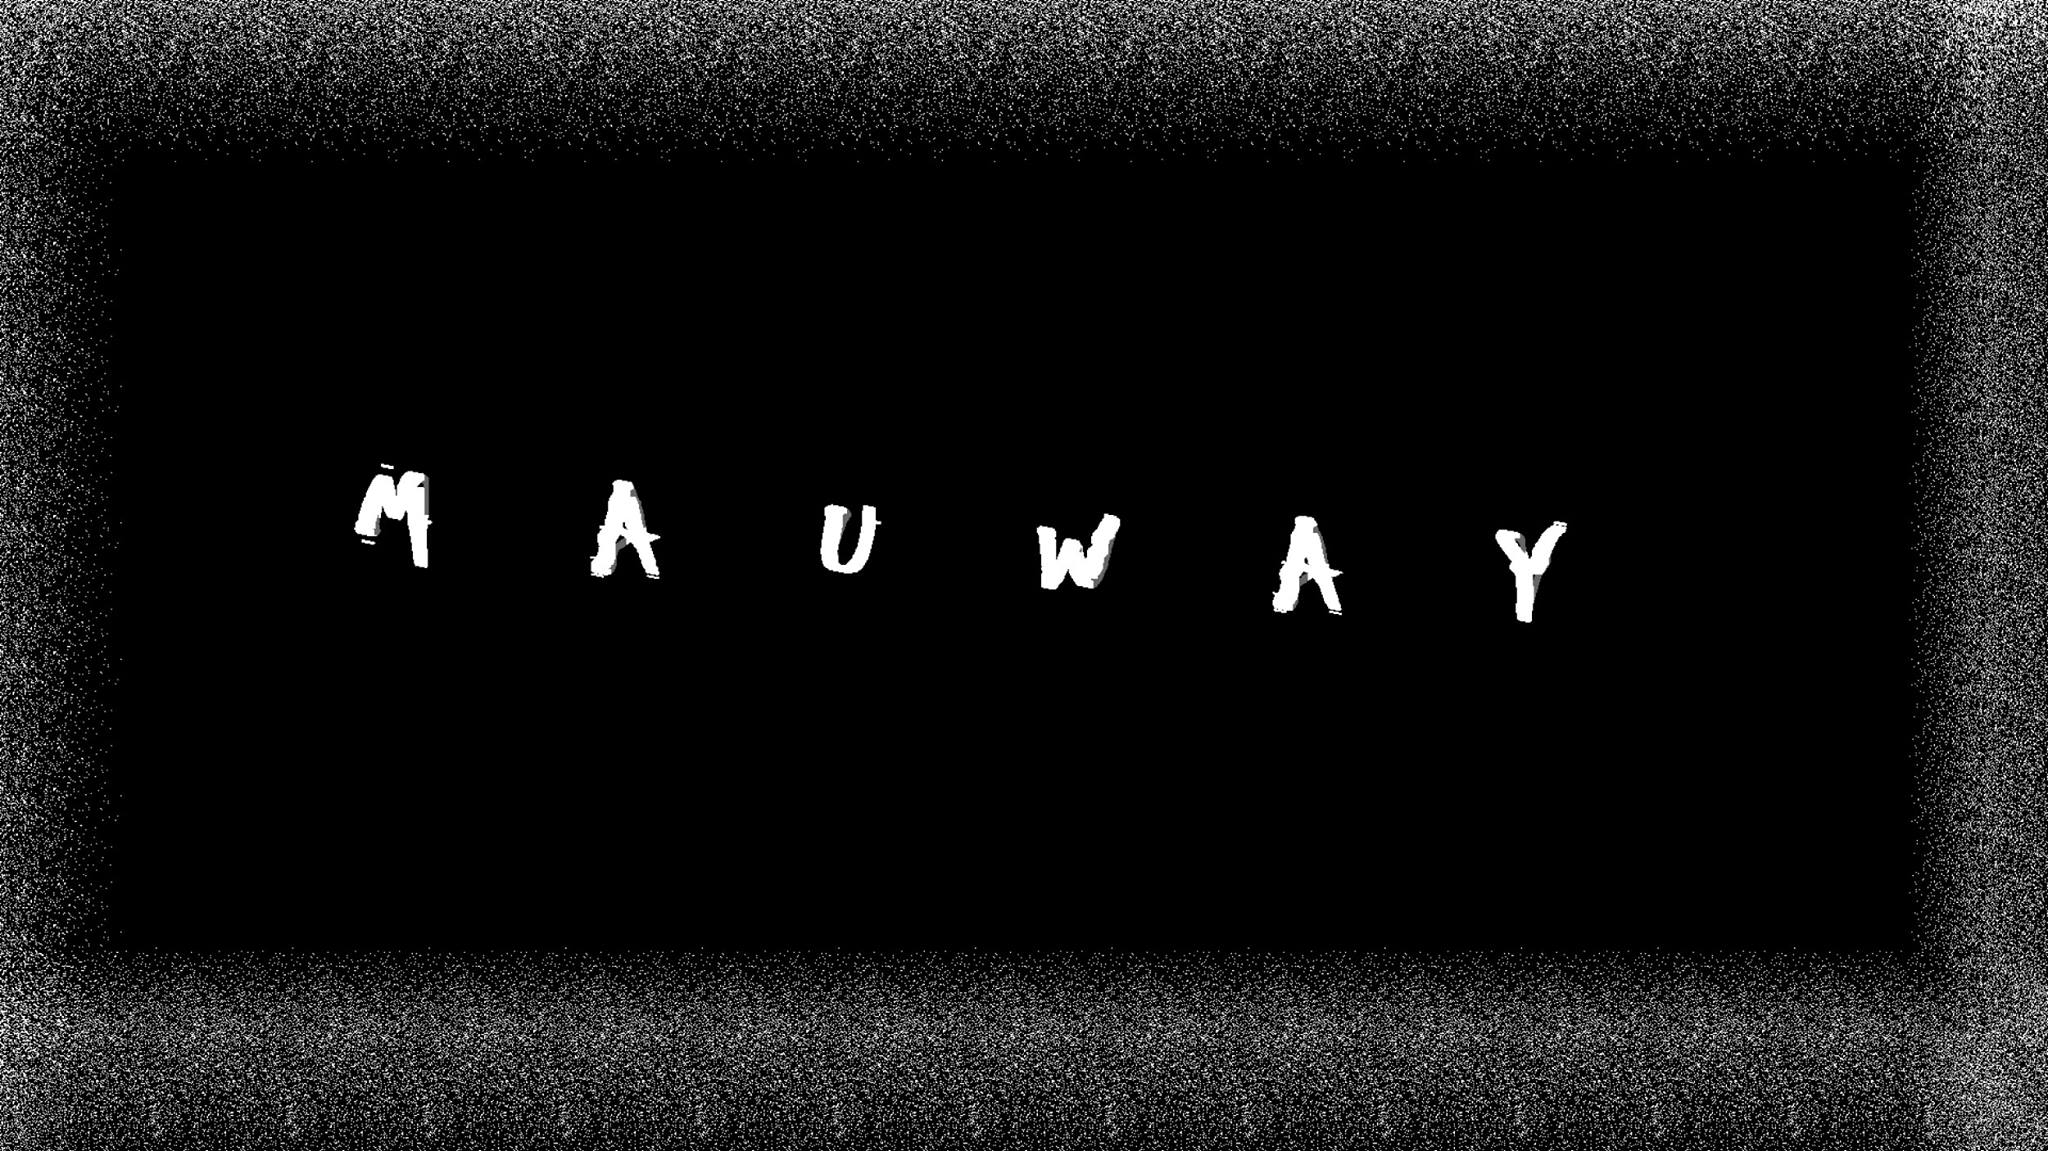 Mauway